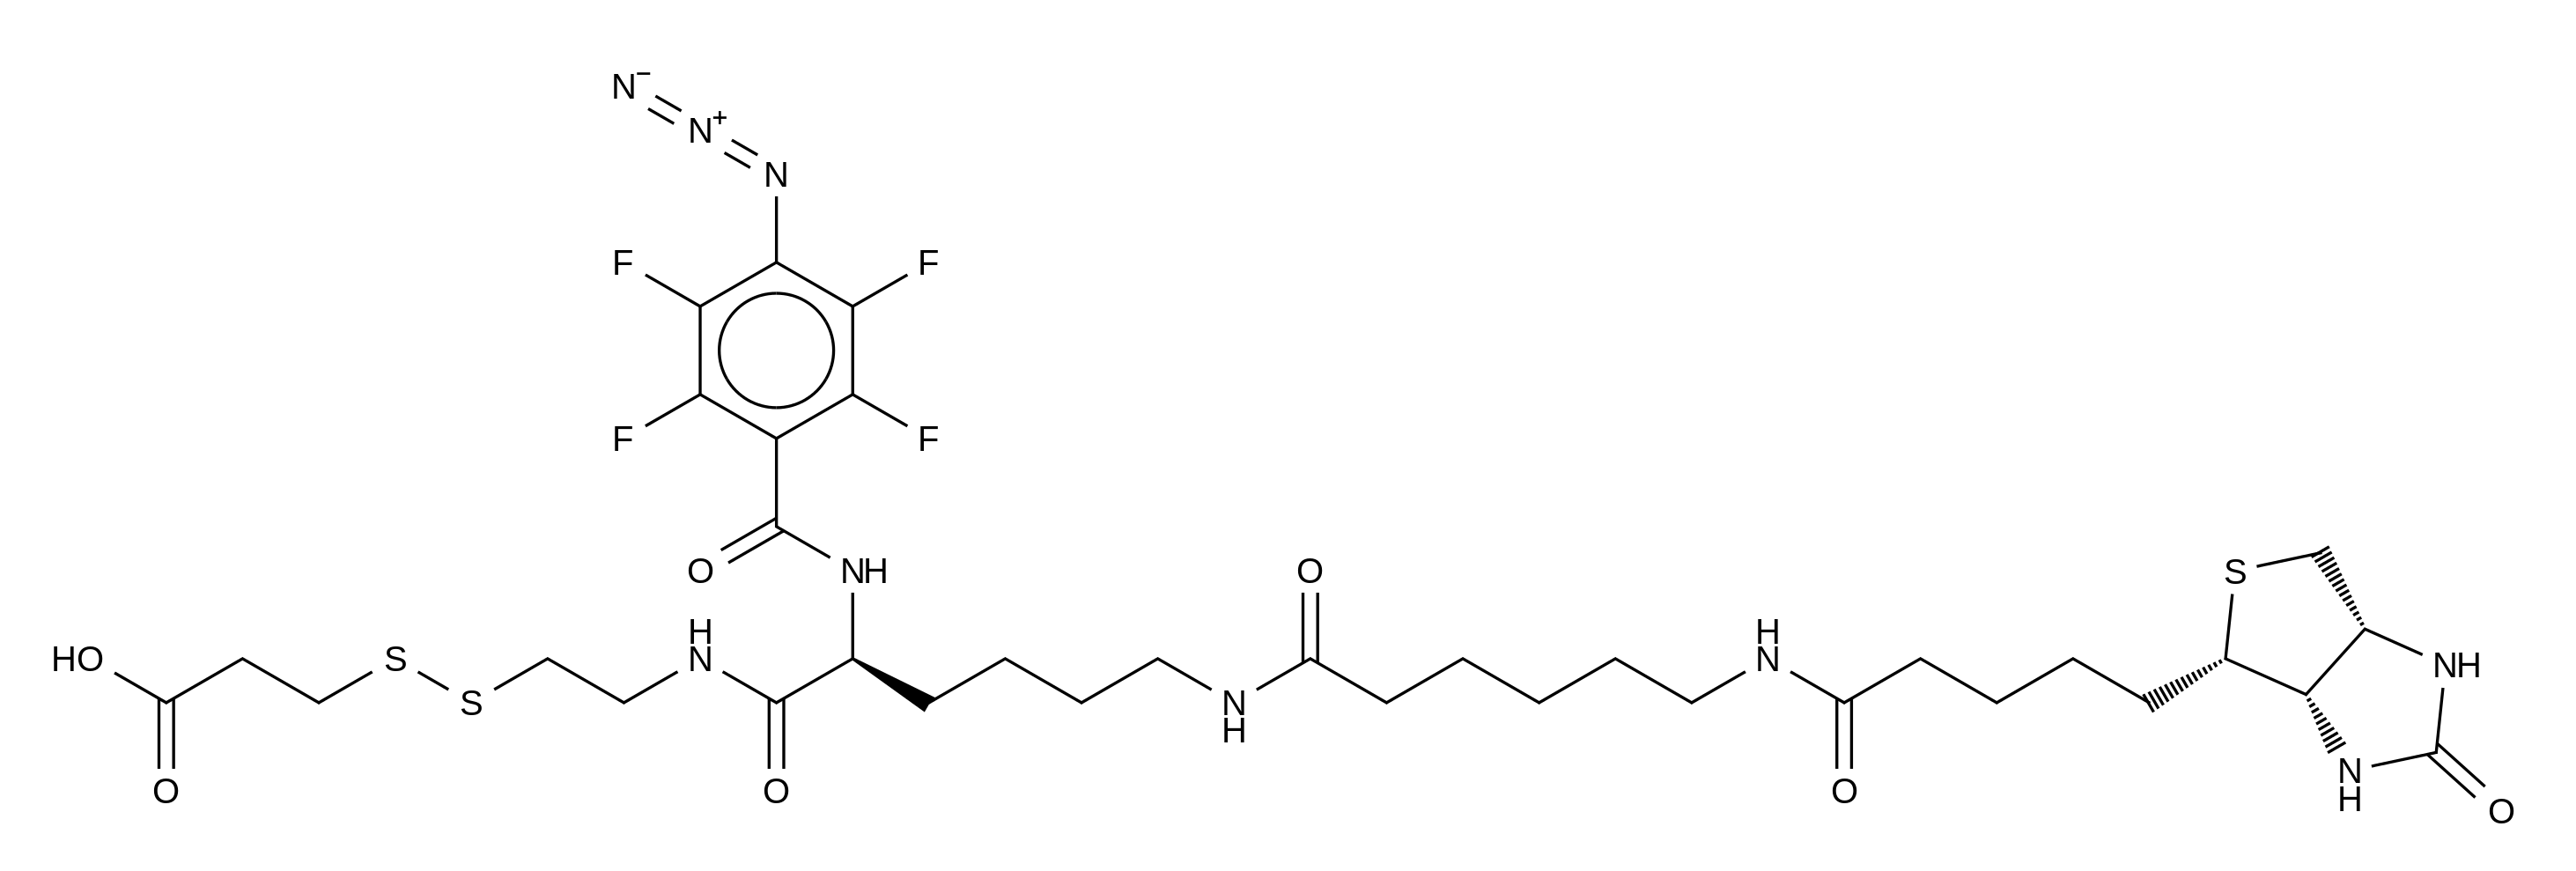 2-[N<sub>2</sub>-(4-Azido-2,3,5,6-tetrafluorobenzoyl)-N<sub>6</sub>-(6 -biotinamidocaproyl)-L-lysinyl]ethyl 2-Carboxyethyl Disulfide